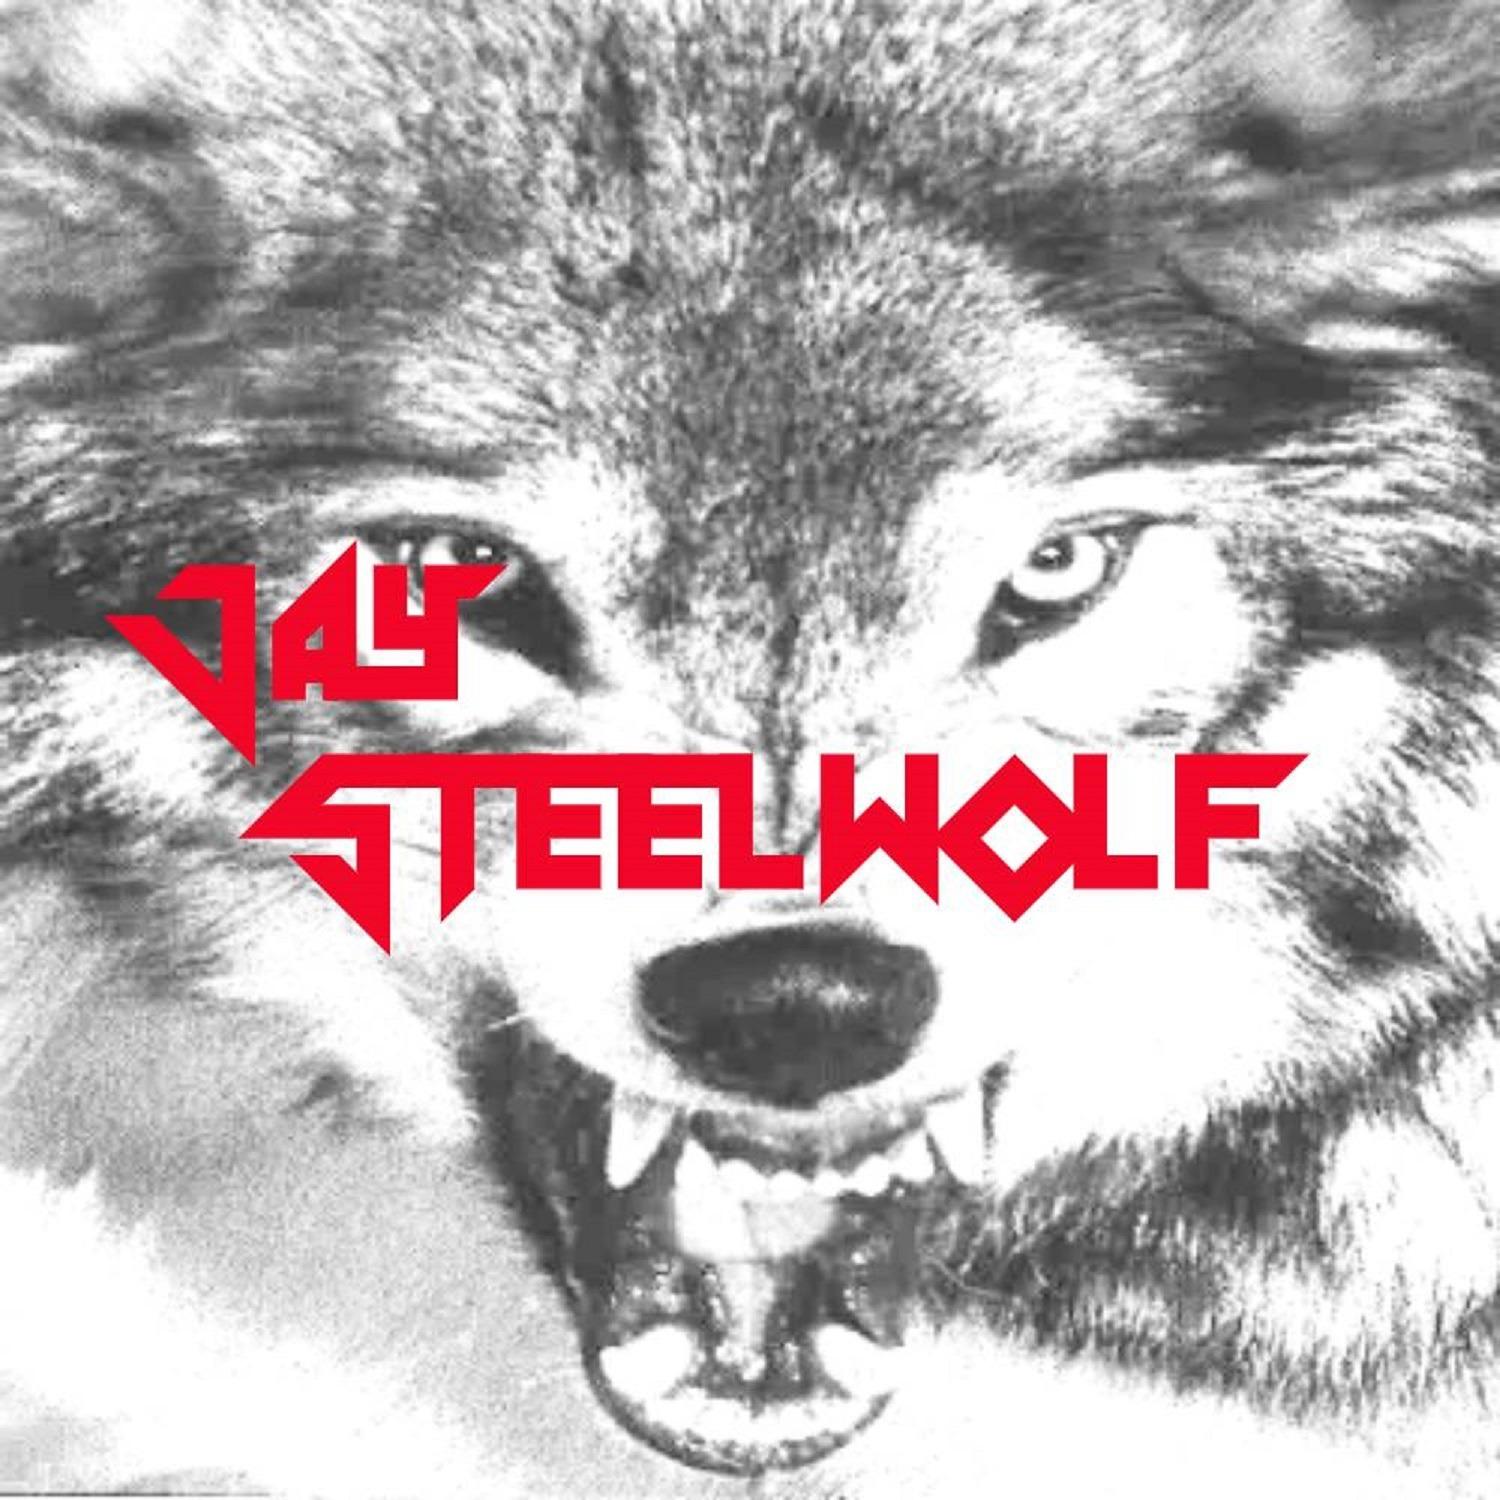 Steelwolf Metal Show